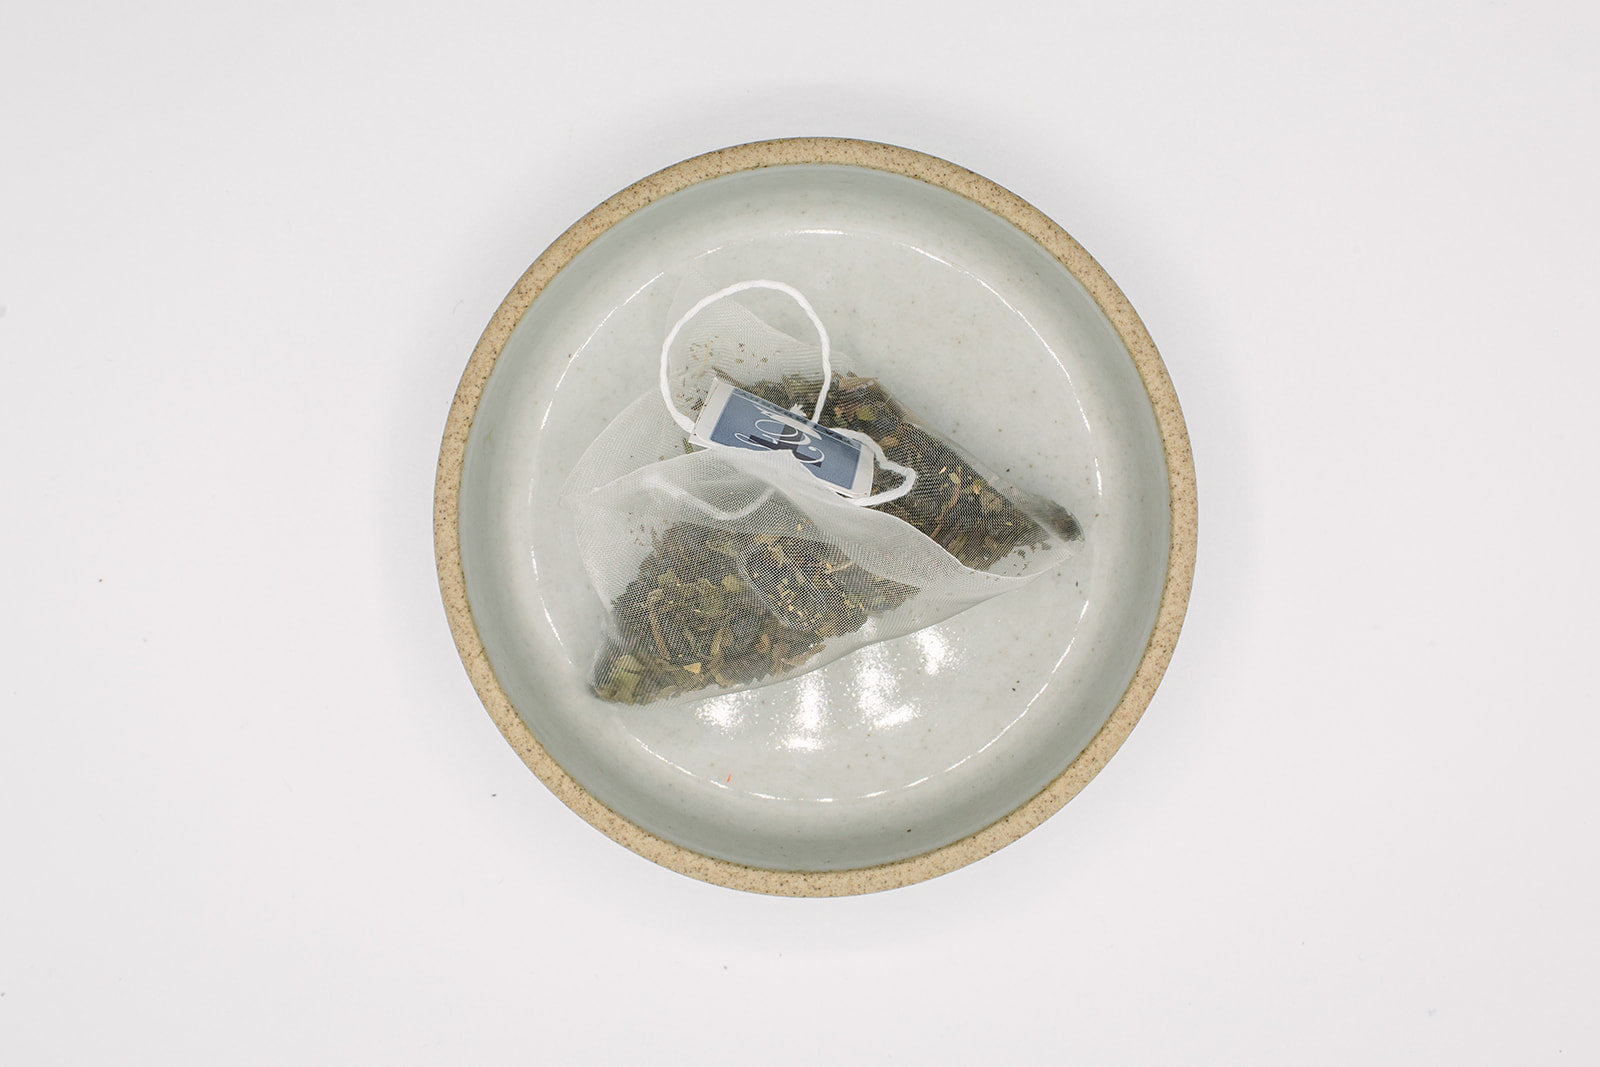 Moroccan Mint Green Tea - 15 Tea Sachets